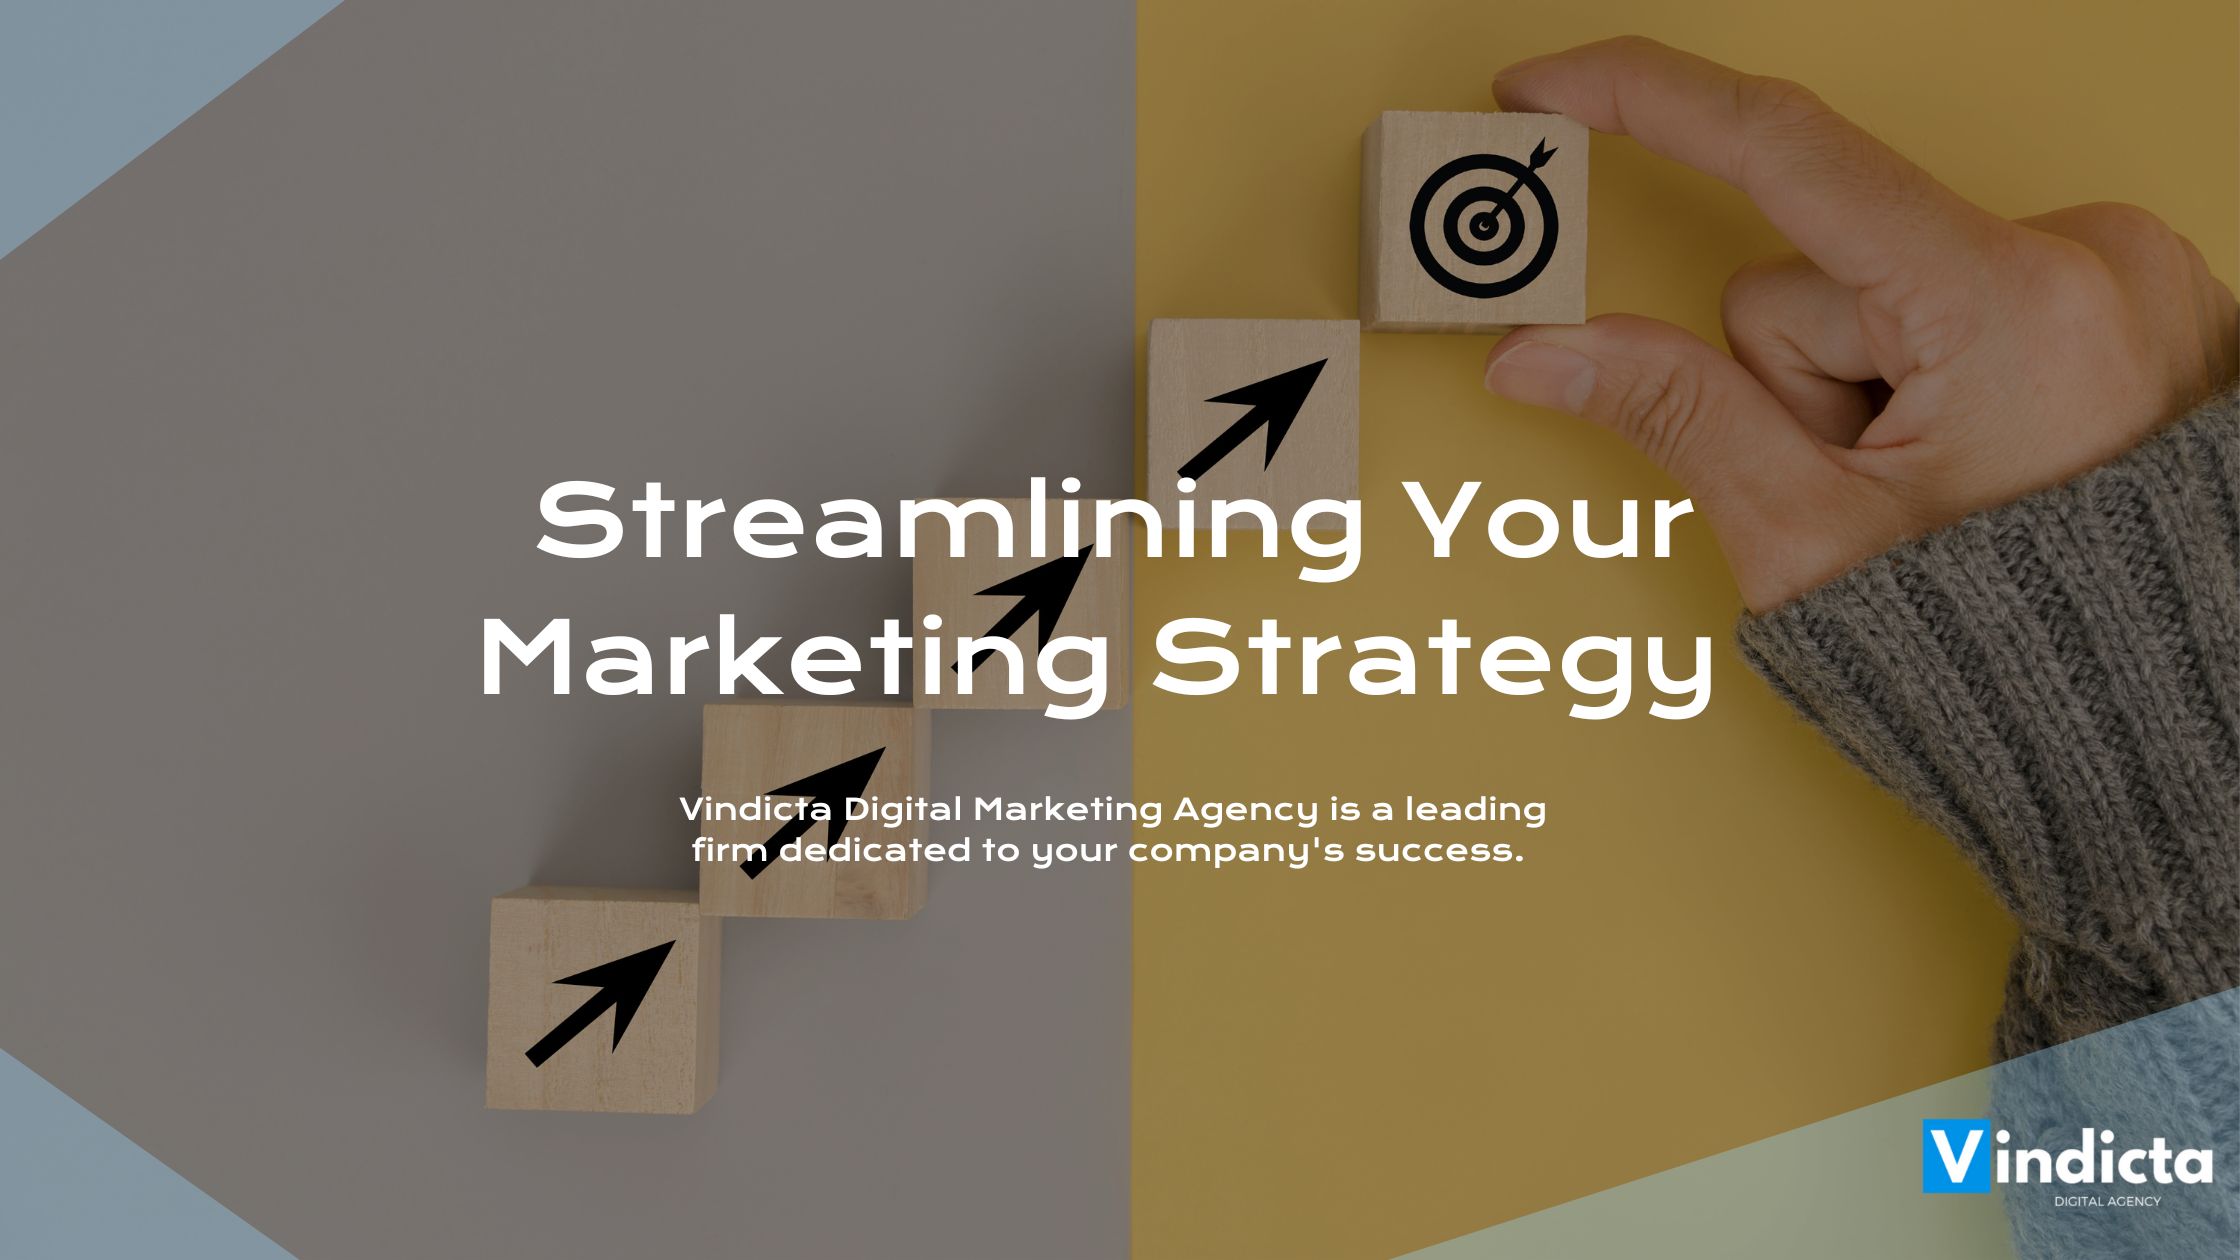 Streamlining Your Marketing Strategy with a Digital Marketing Agency